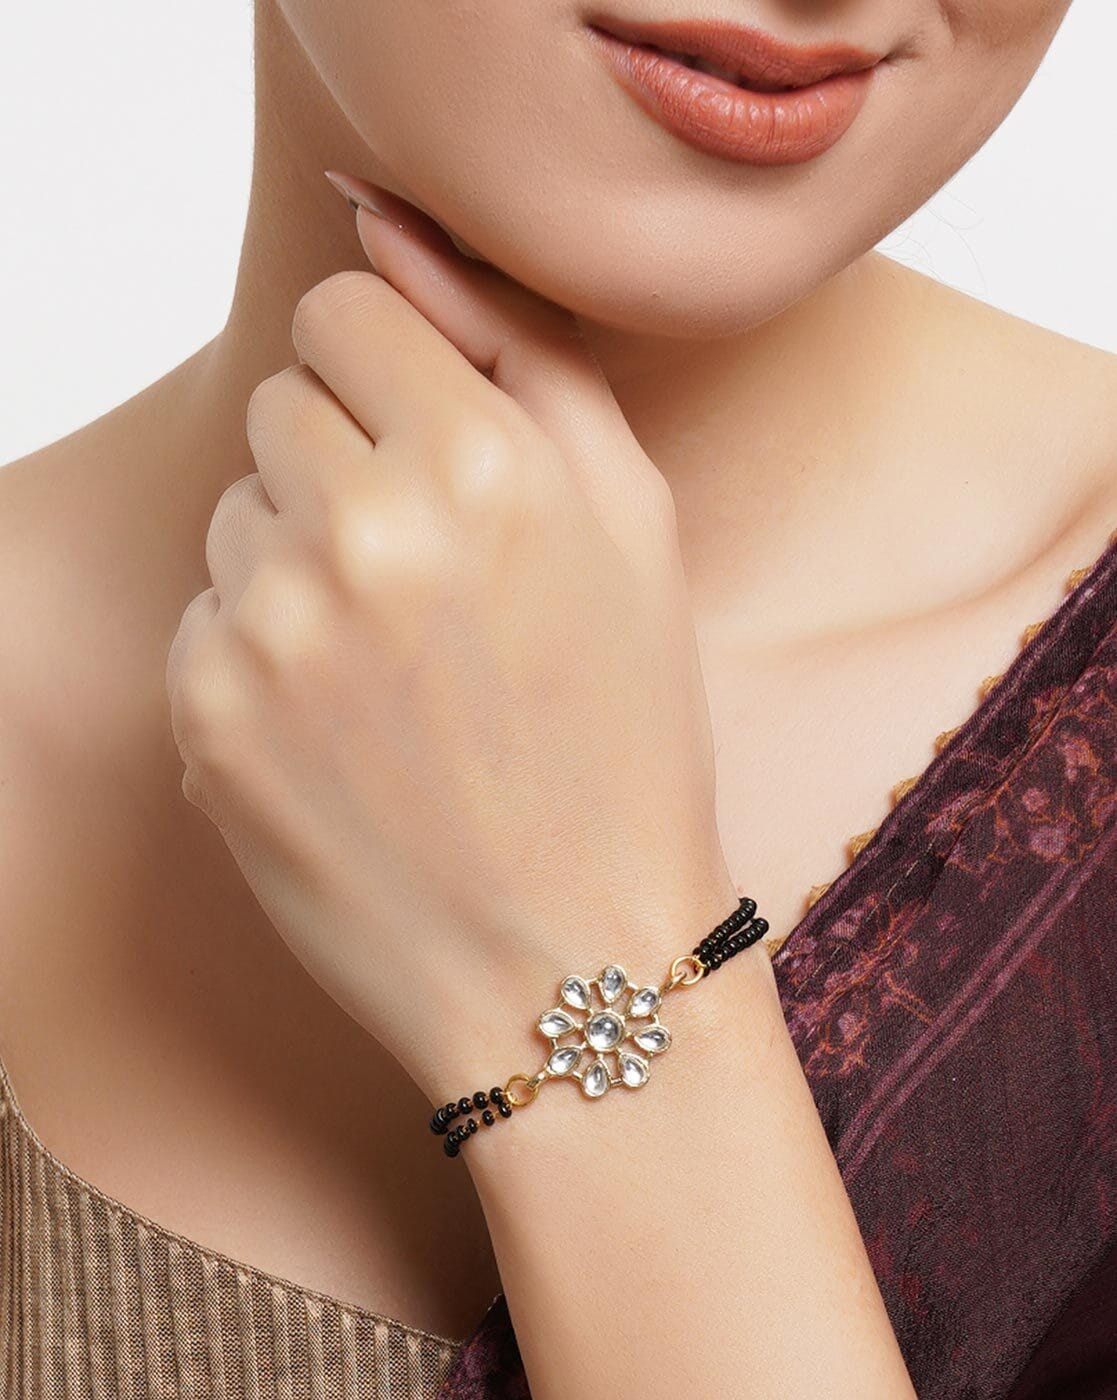 New Age Bracelet And Ring Mangalsutra Designs For Brides | Diamond bracelet  design, Diamond pendants designs, Bracelet designs